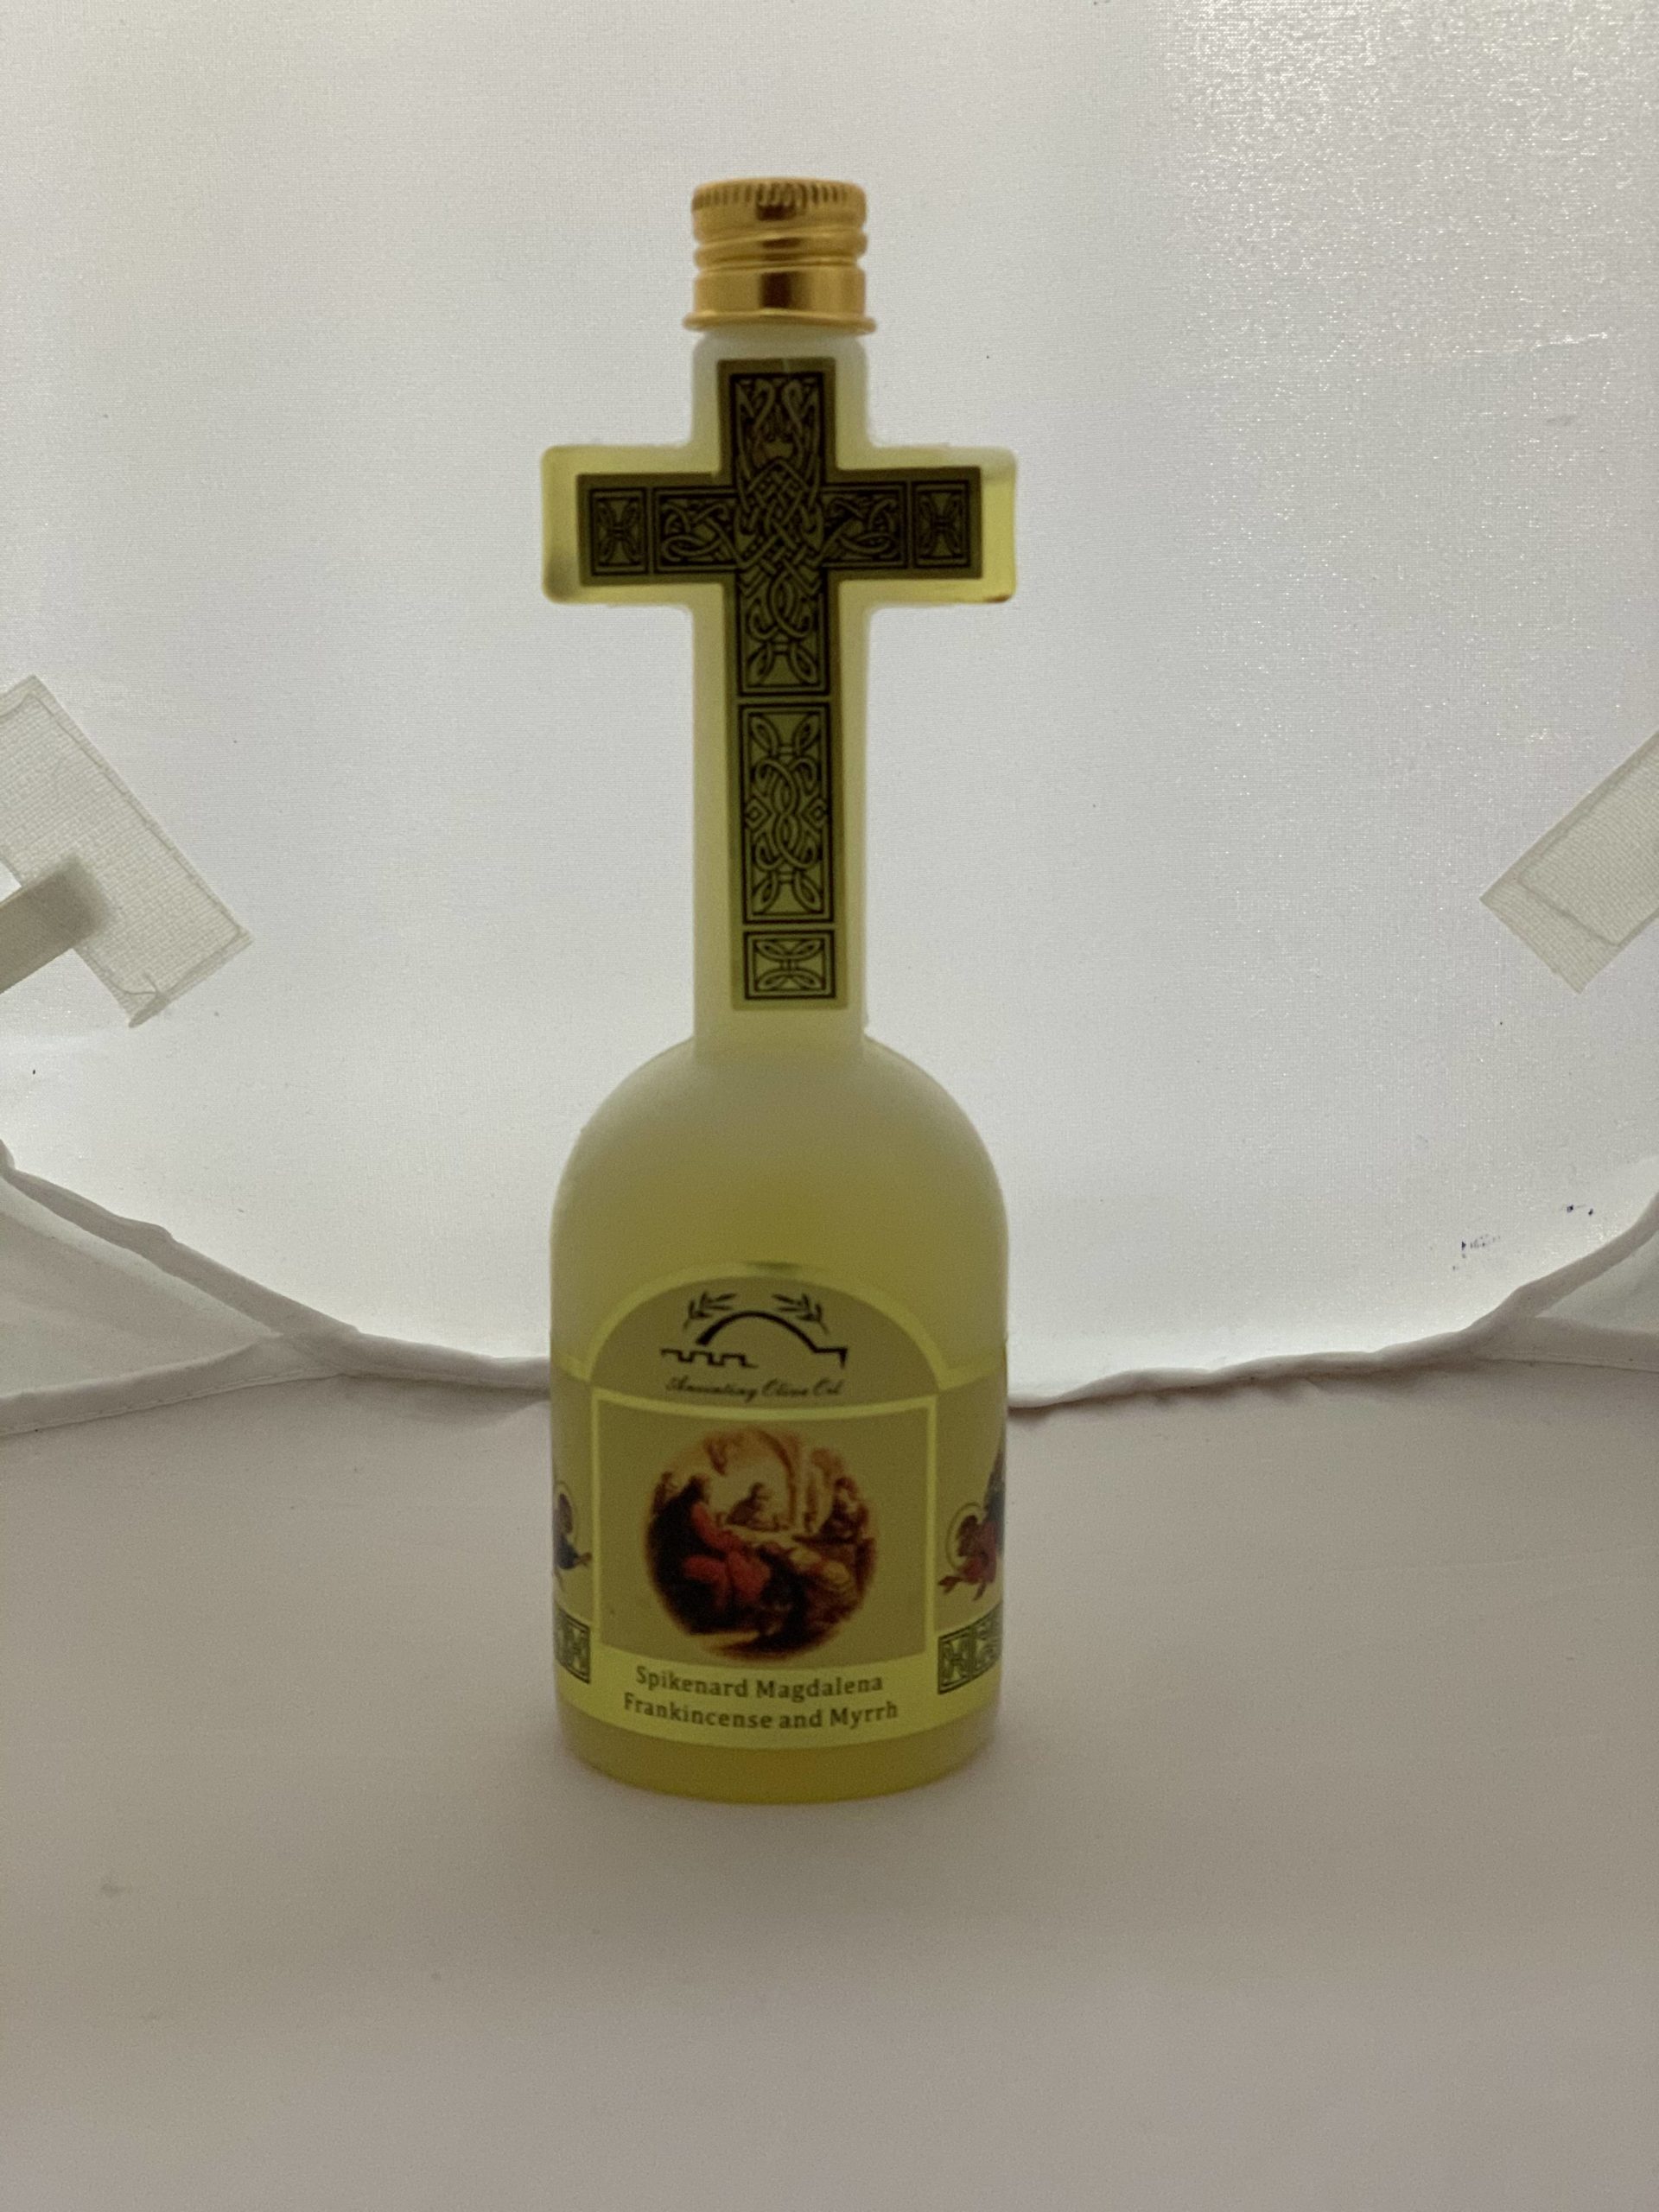 60106 - Alabaster anointing oil bottle - white